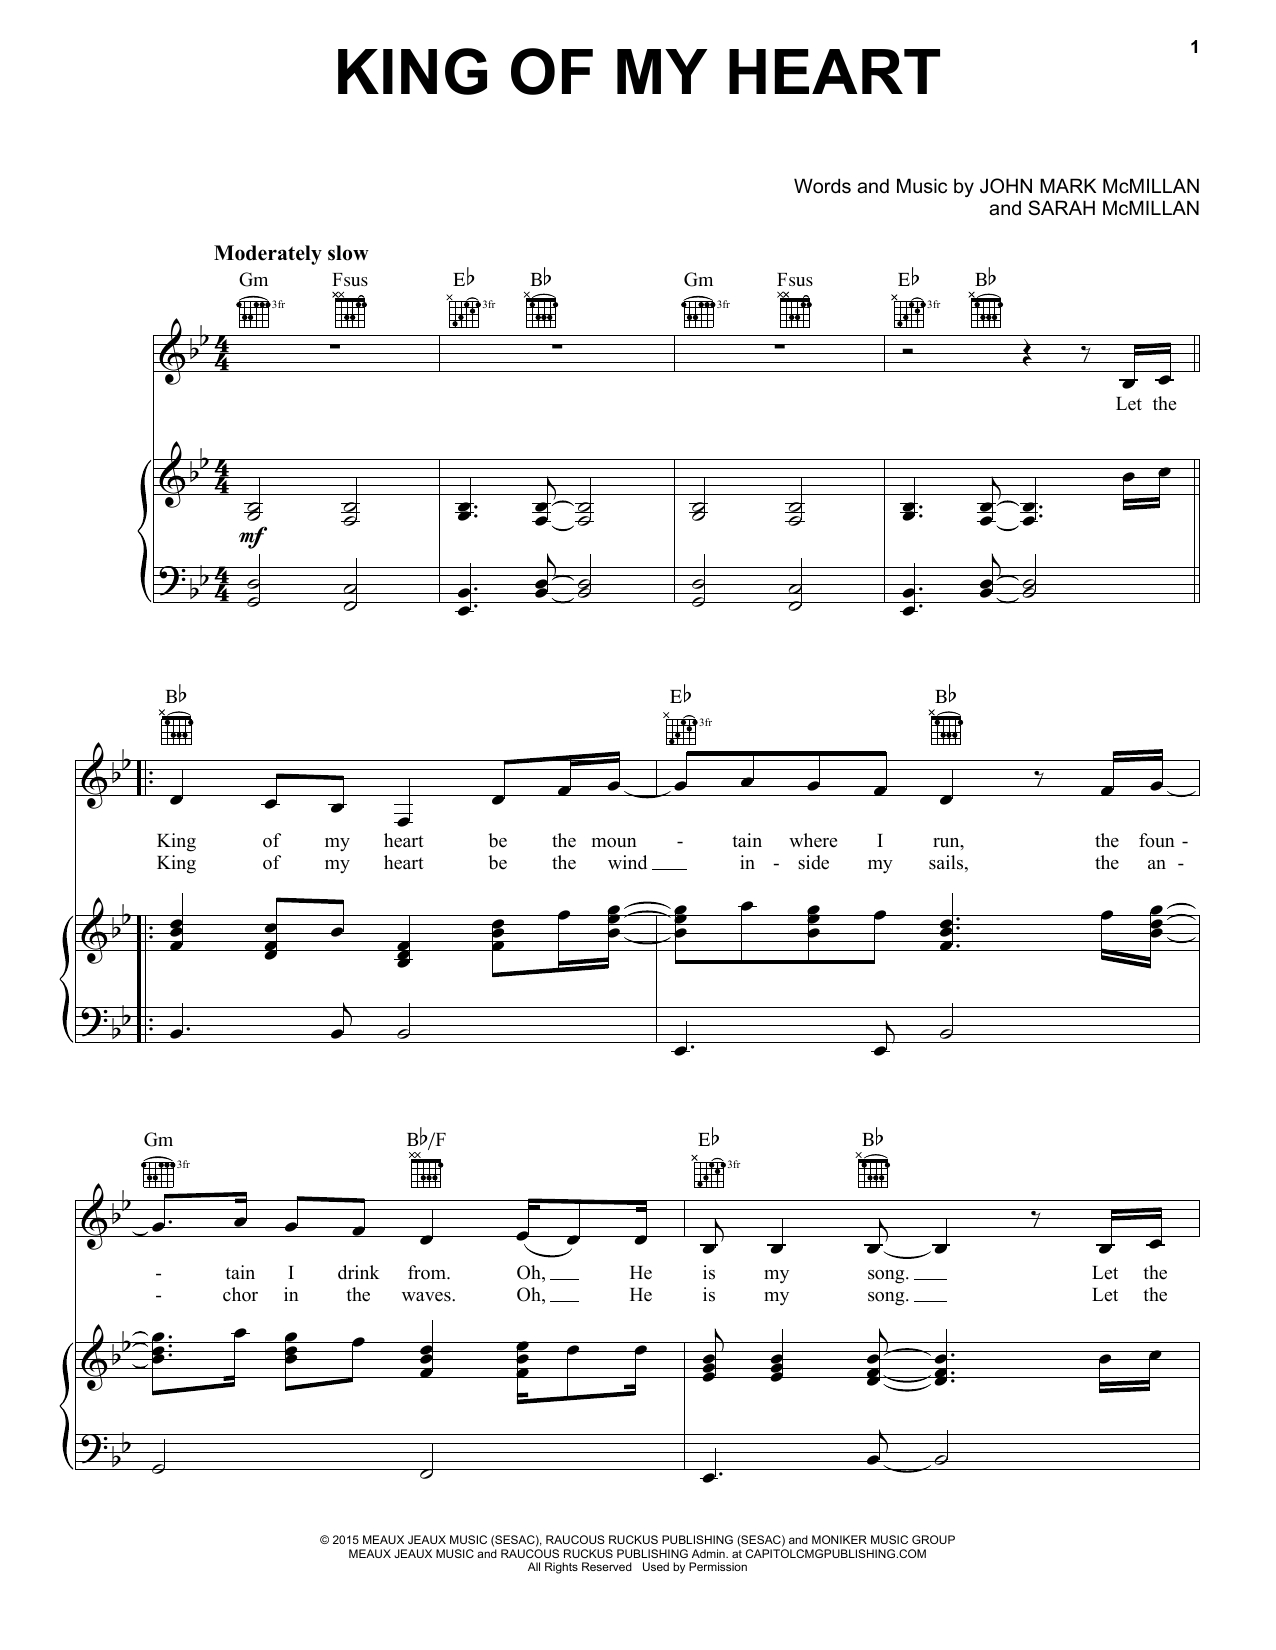 King Of My Heart Chords John Mark Mcmillan King Of My Heart Sheet Music Notes Chords Download Printable Piano Vocal Guitar Right Hand Melody Sku 180388